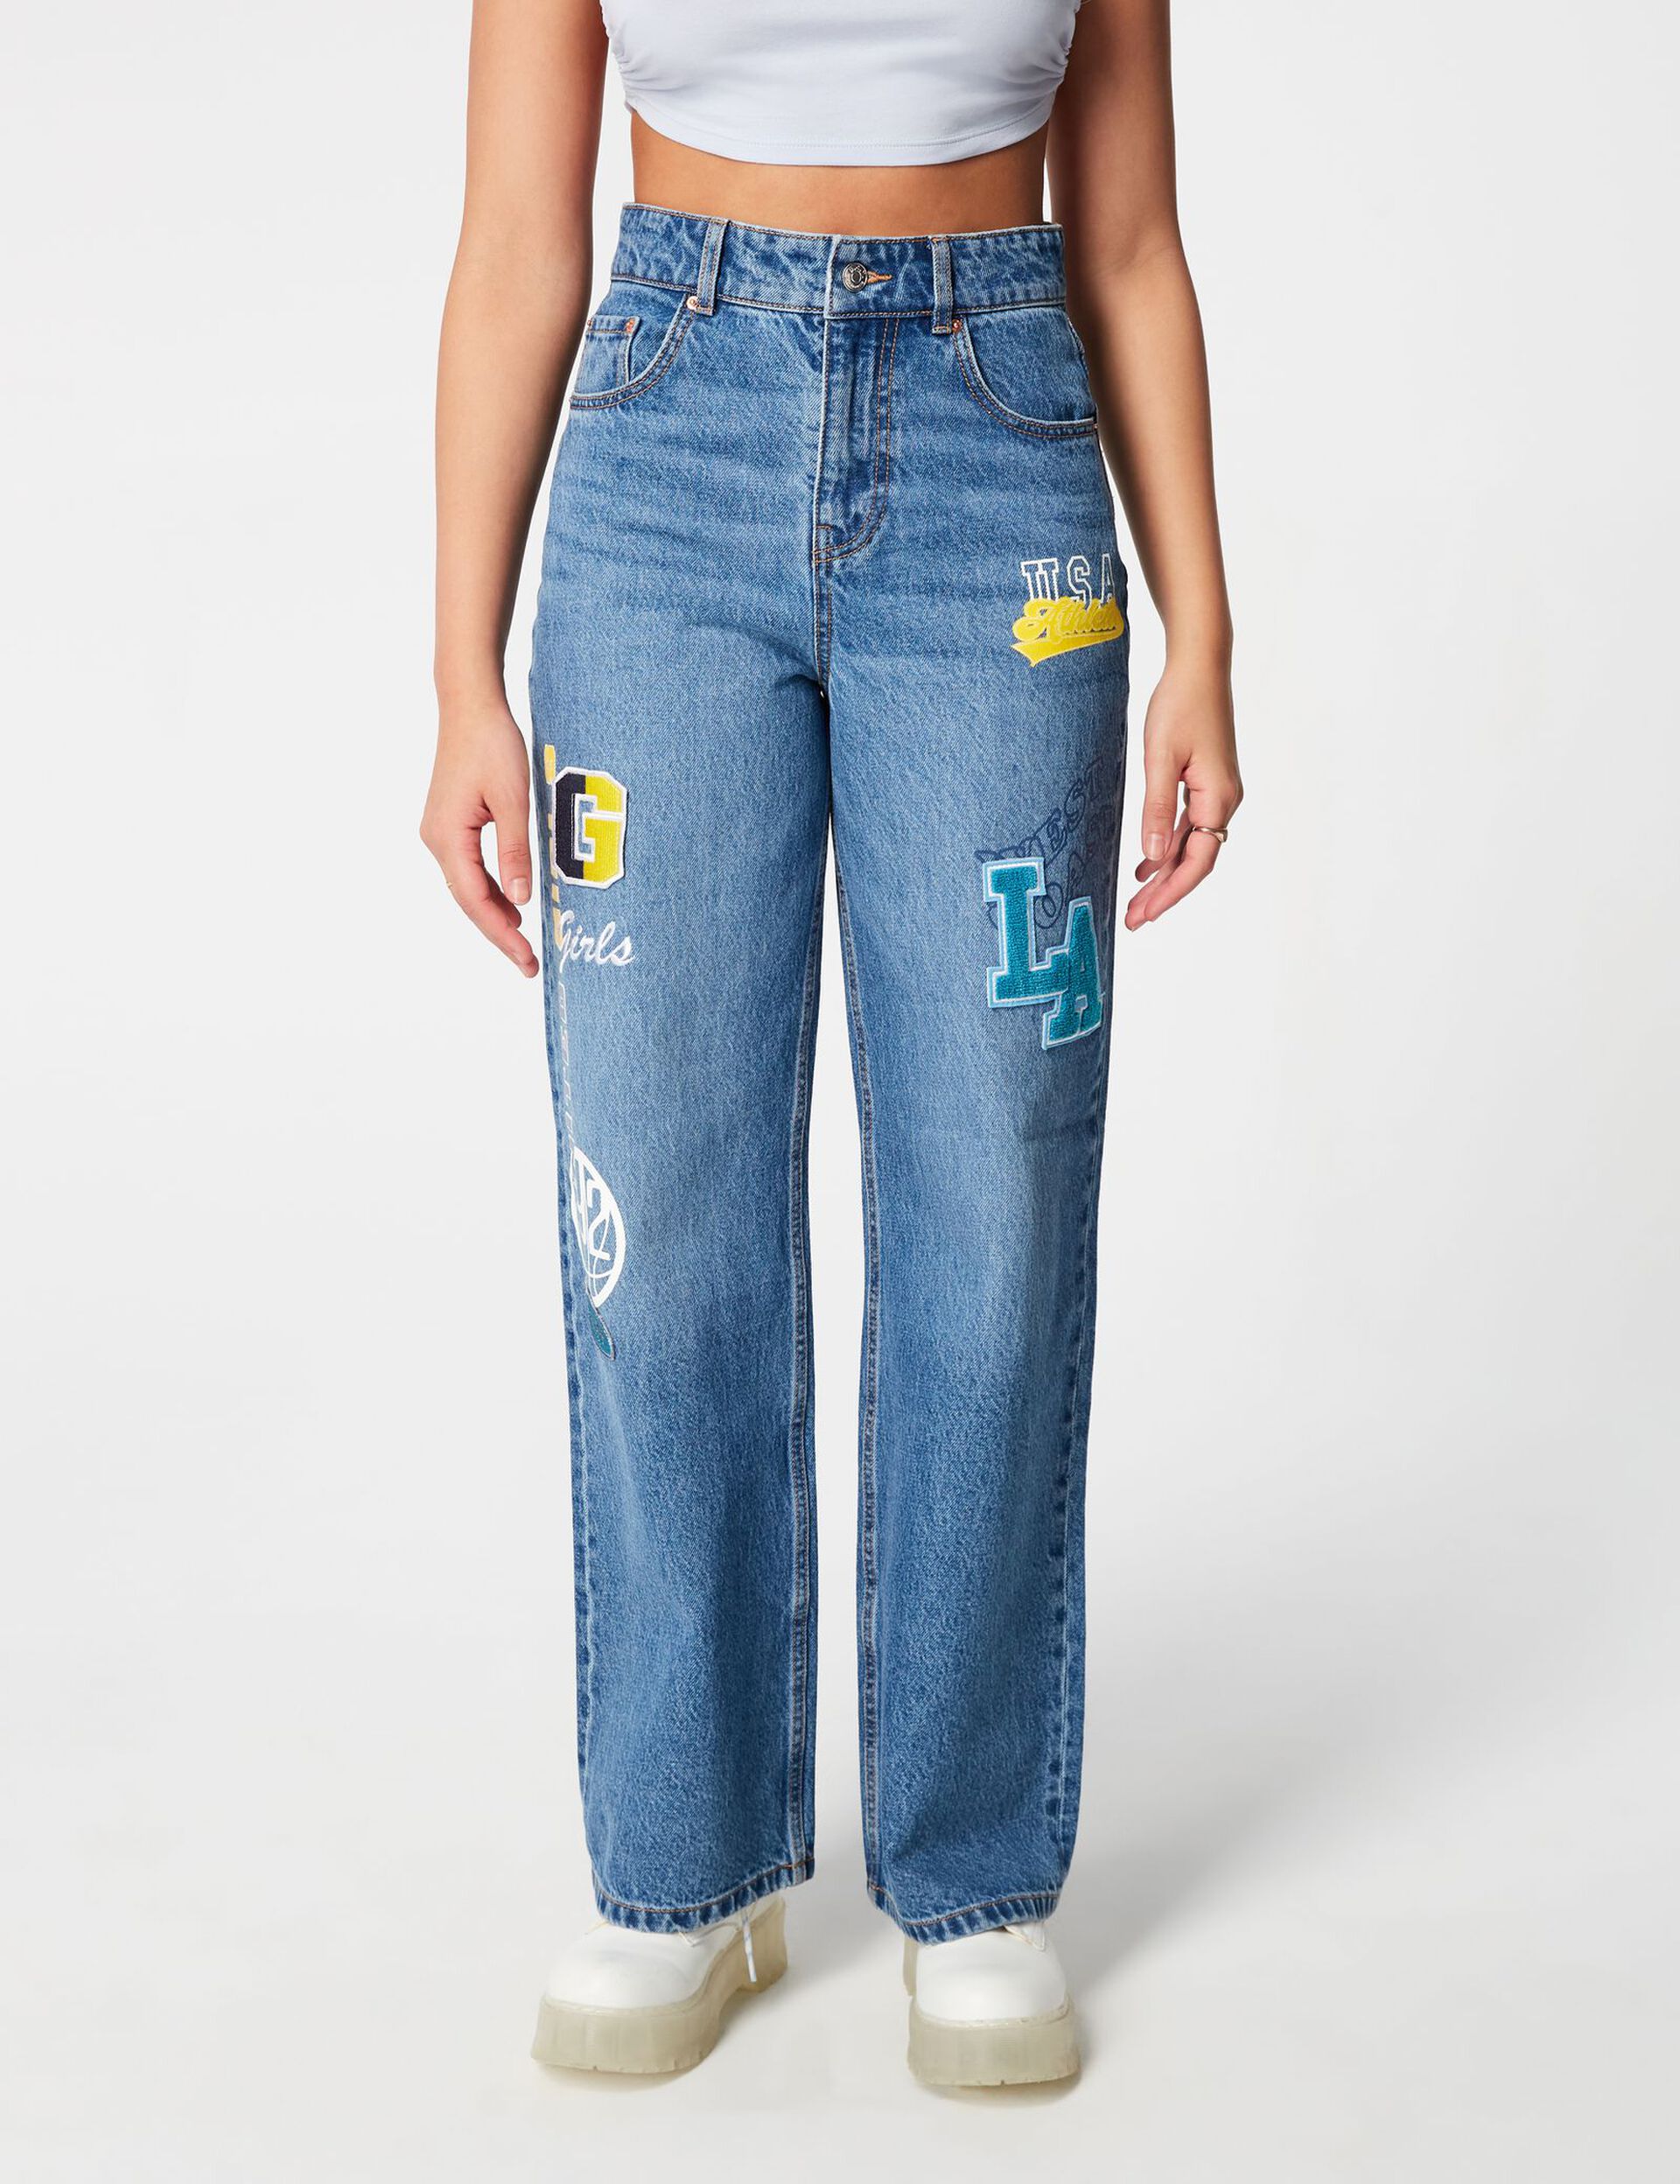 Wide-leg slogan jeans